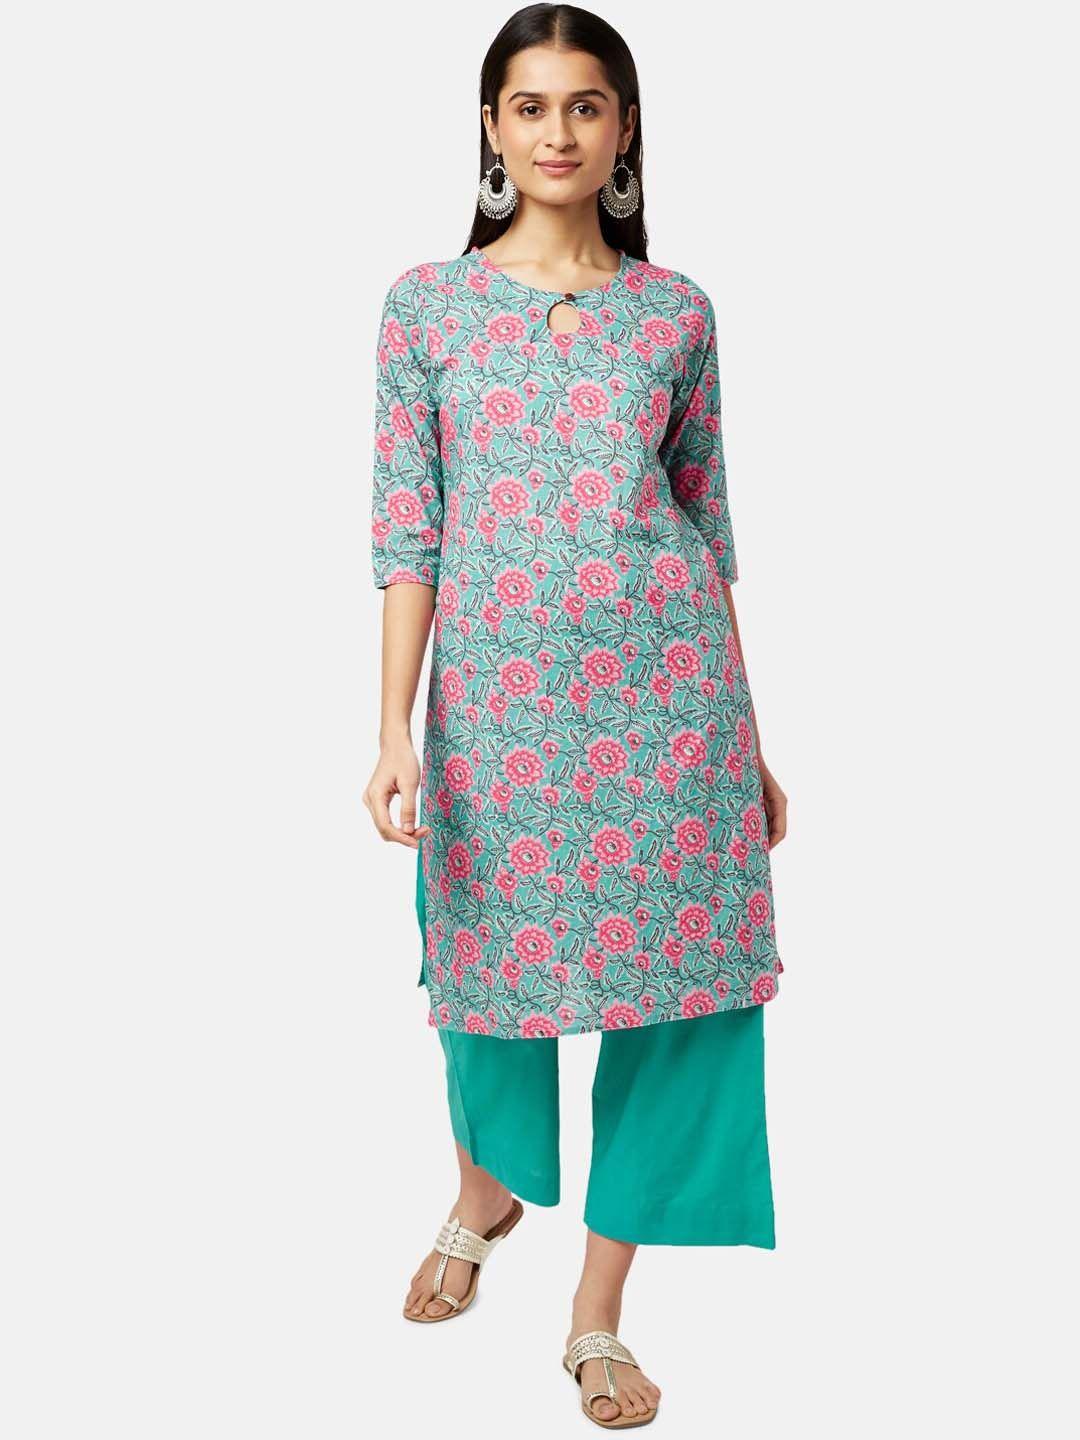 rangmanch by pantaloons women green floral printed pure cotton kurta with palazzos